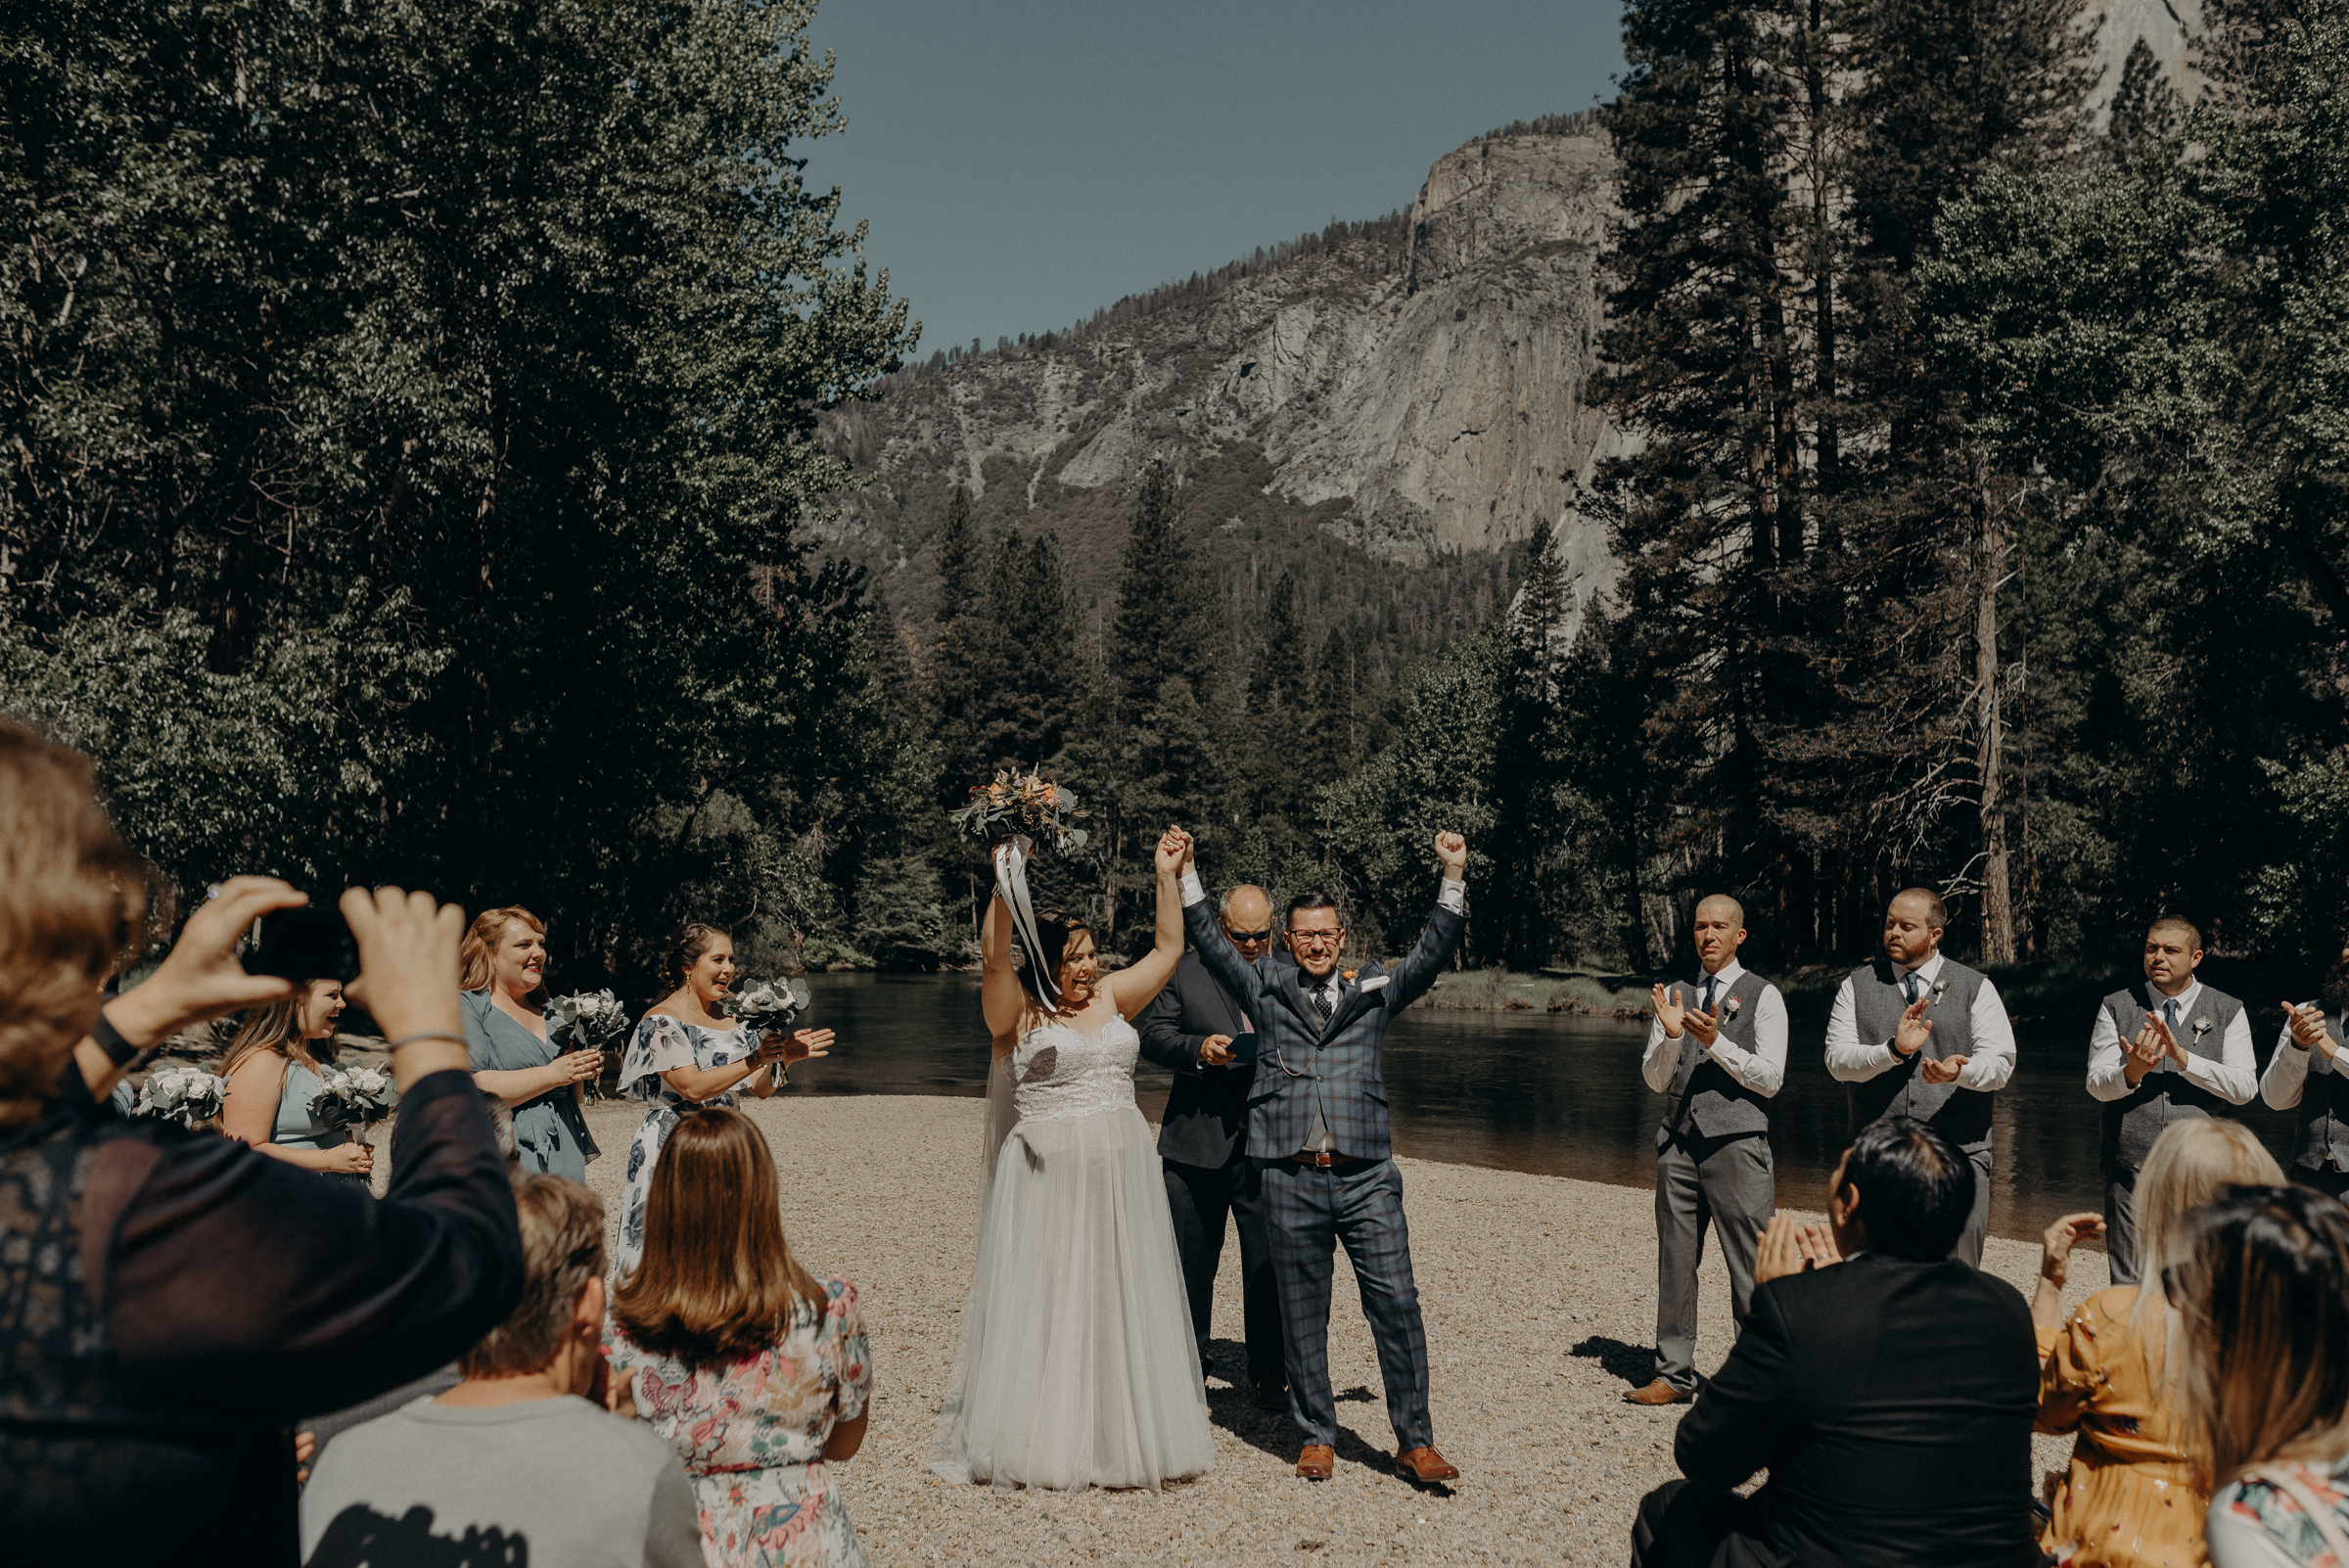 Los Angeles Wedding Photographers - Yosemite Destination Wedding Elopement - IsaiahAndTaylor.com -061.jpg